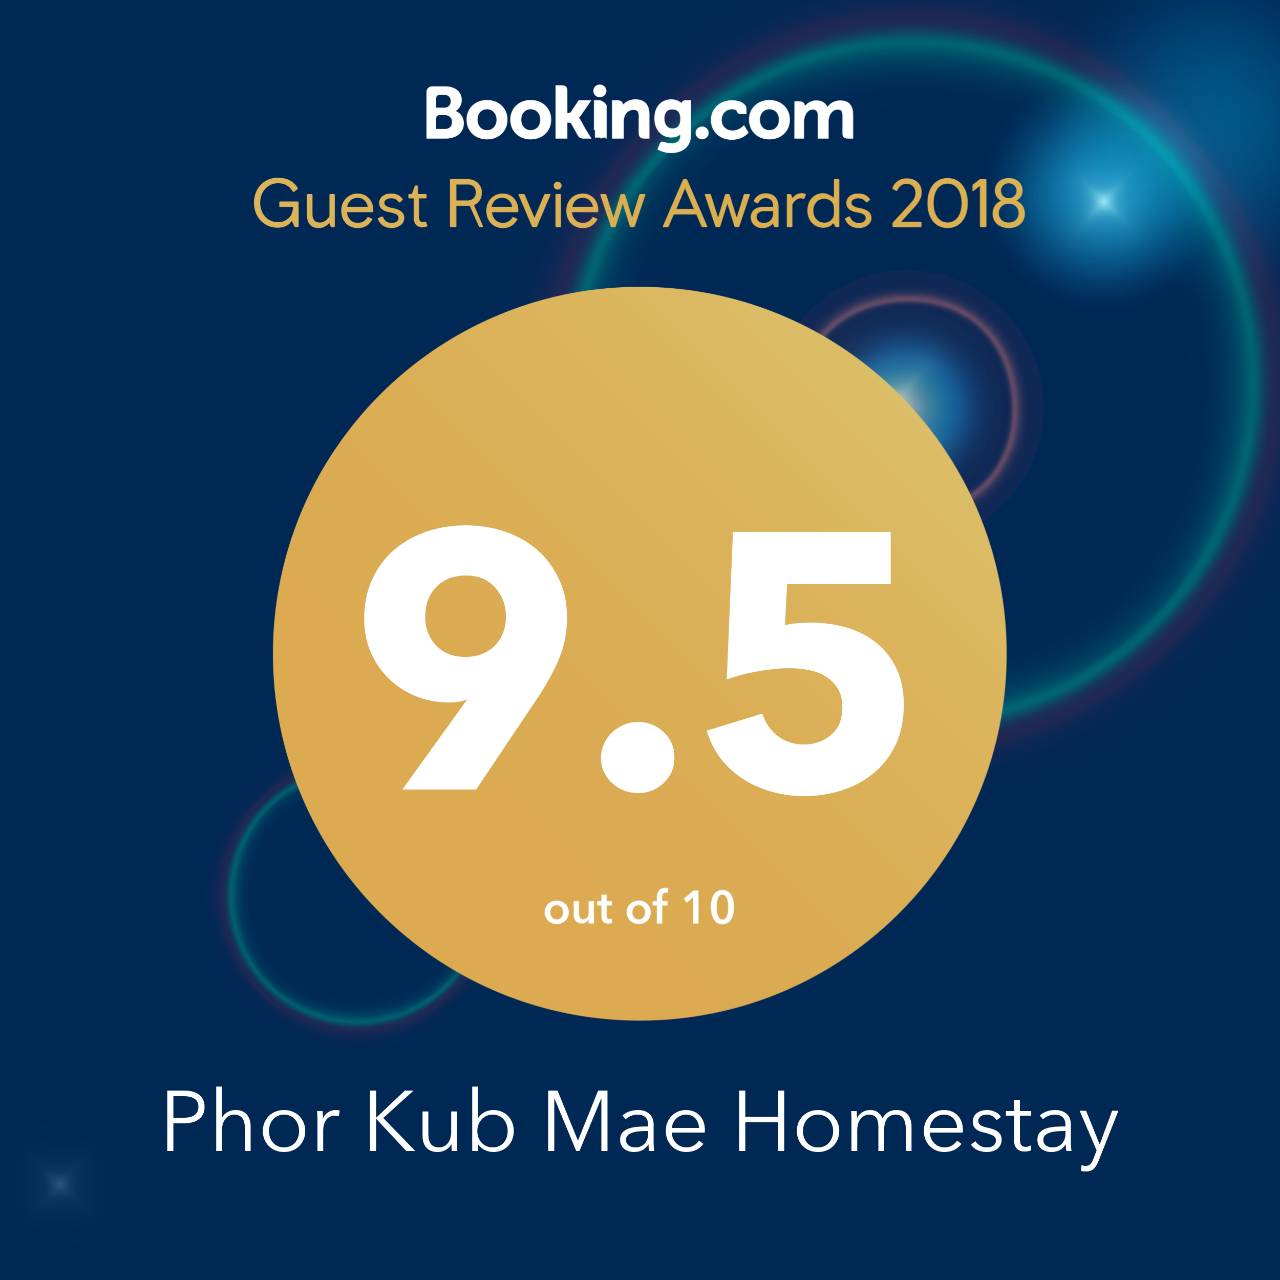 phorkubmaehomestay booking.com